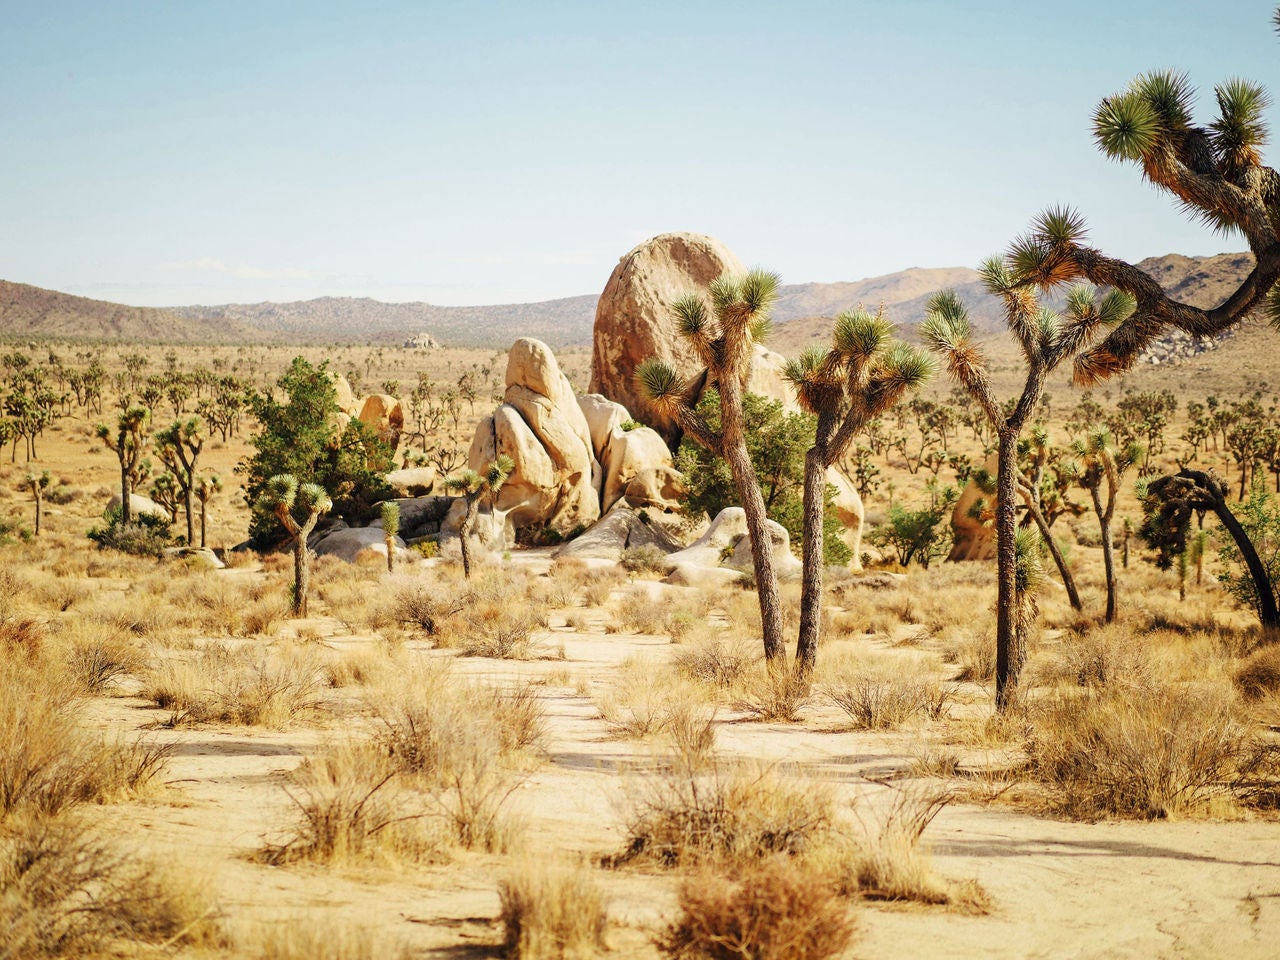 Desert landscape in Joshua Tree, California